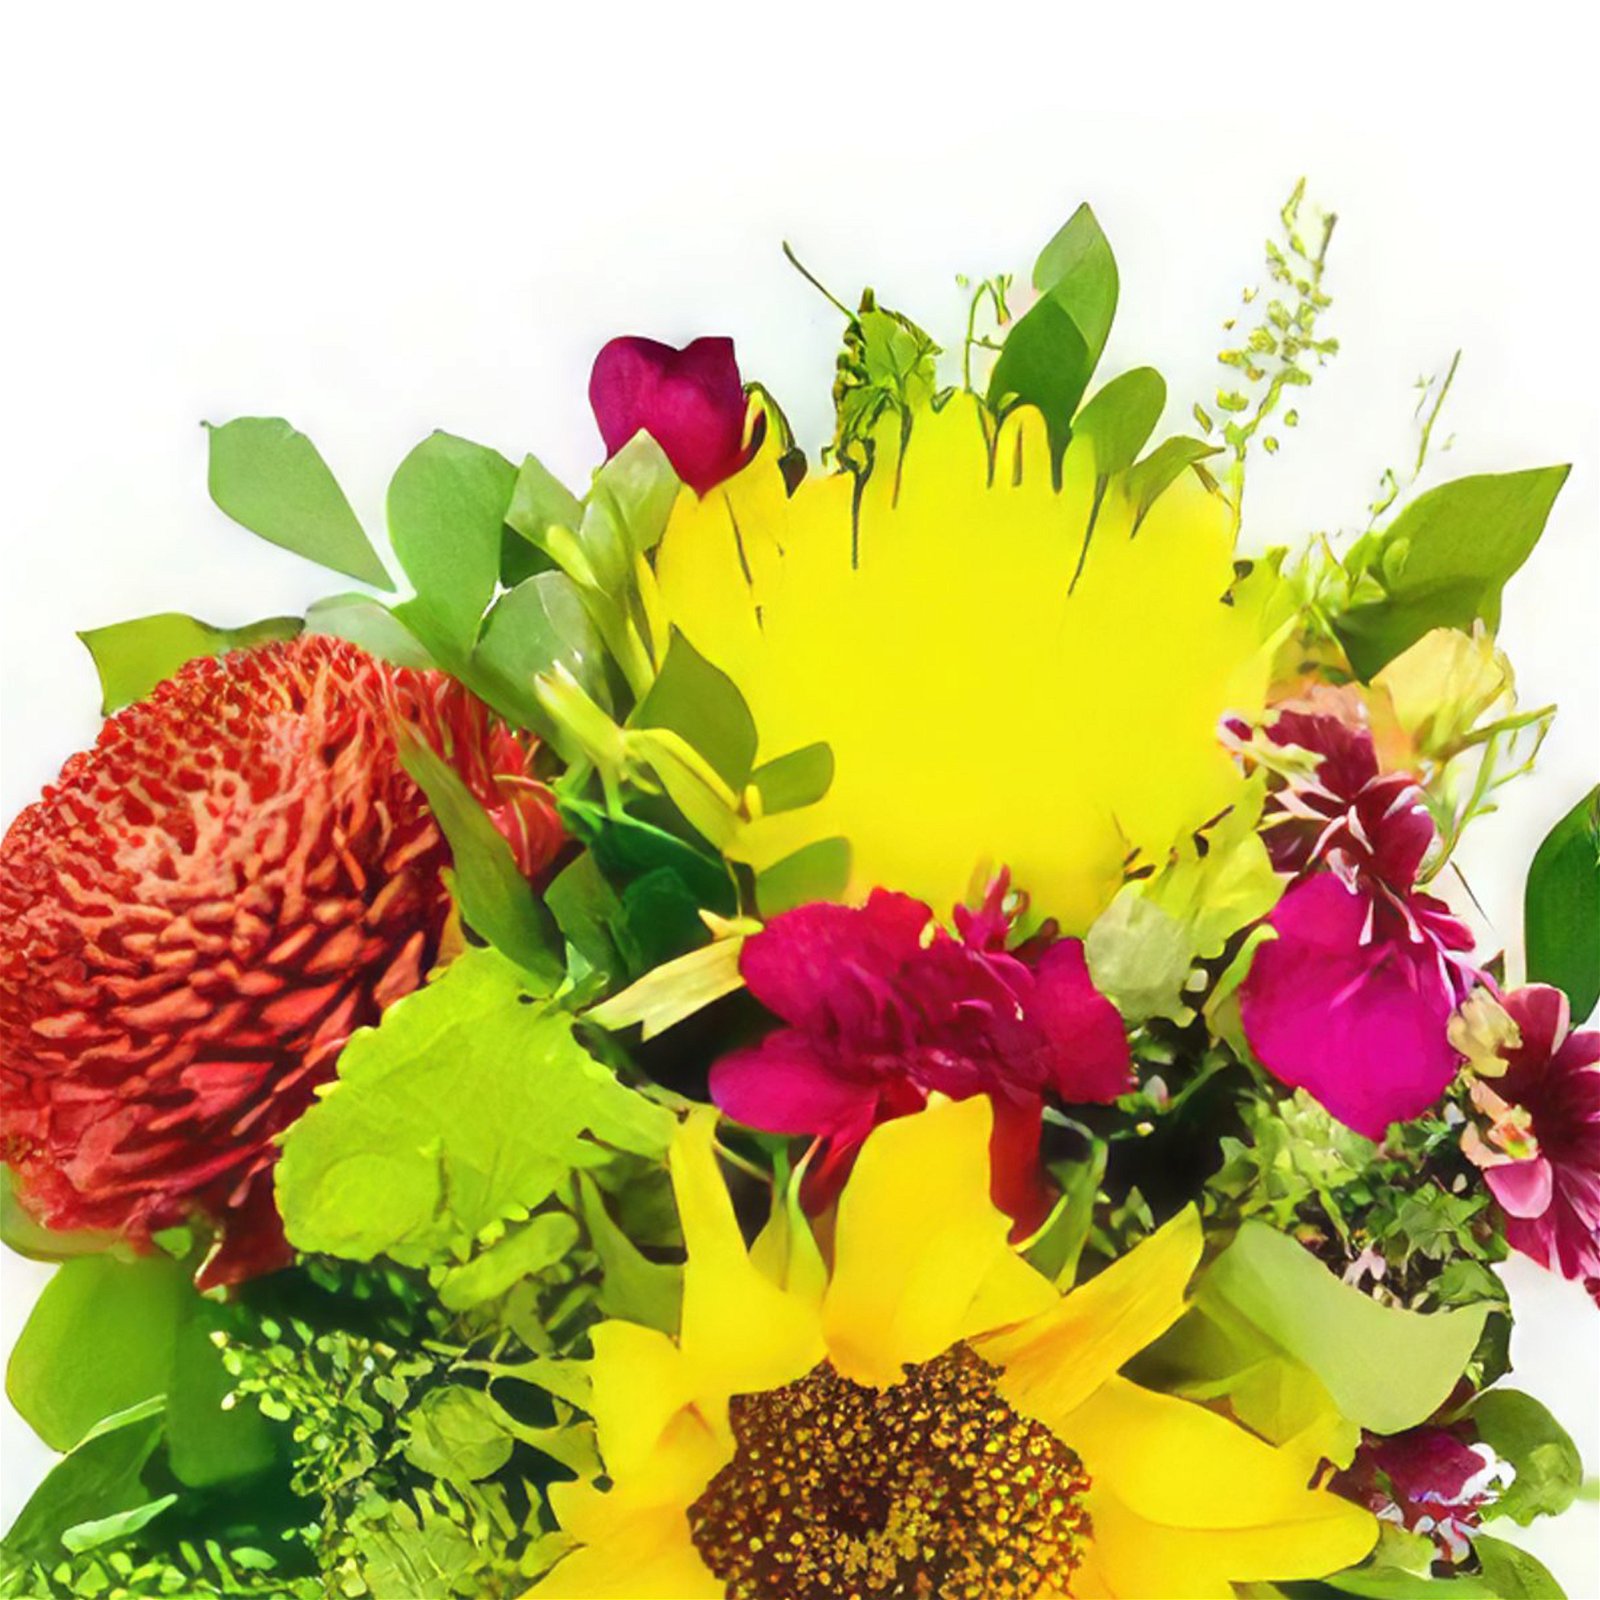 Arroyo el Muerto cvijeća- Proljetna ljubav Cvjetni buket/aranžman